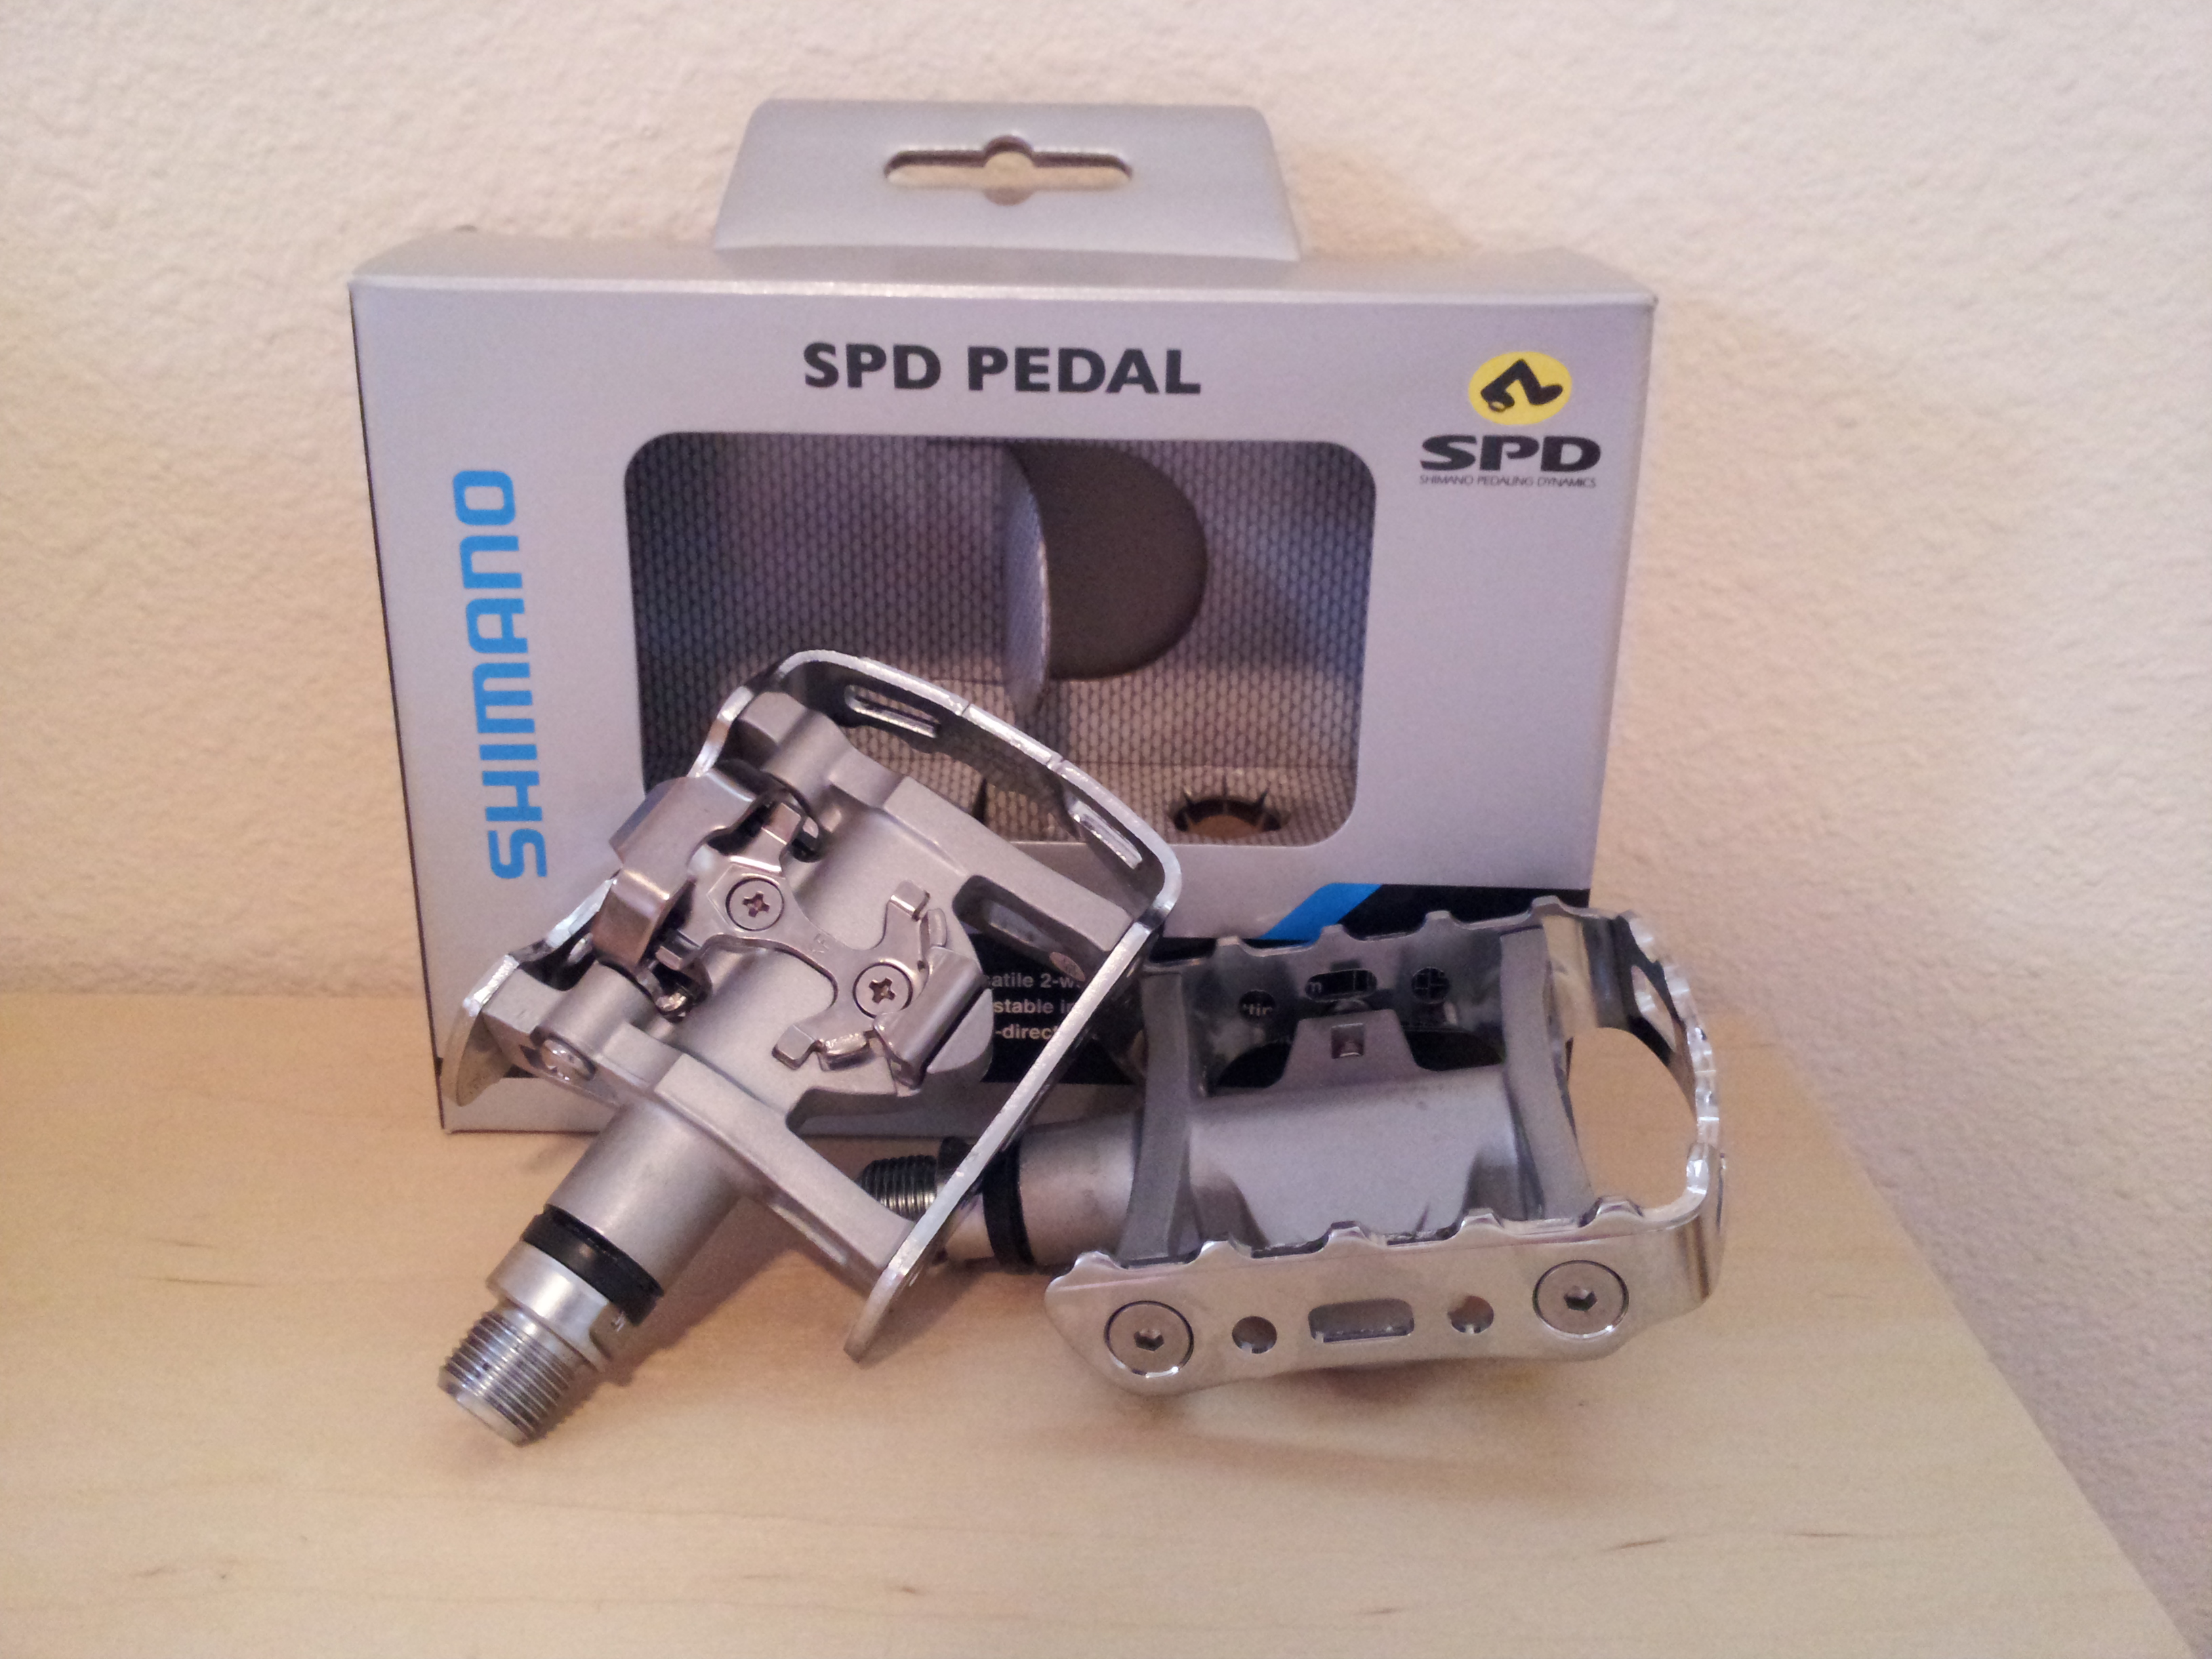 Shimano PD-M324 SPD Pedal Review